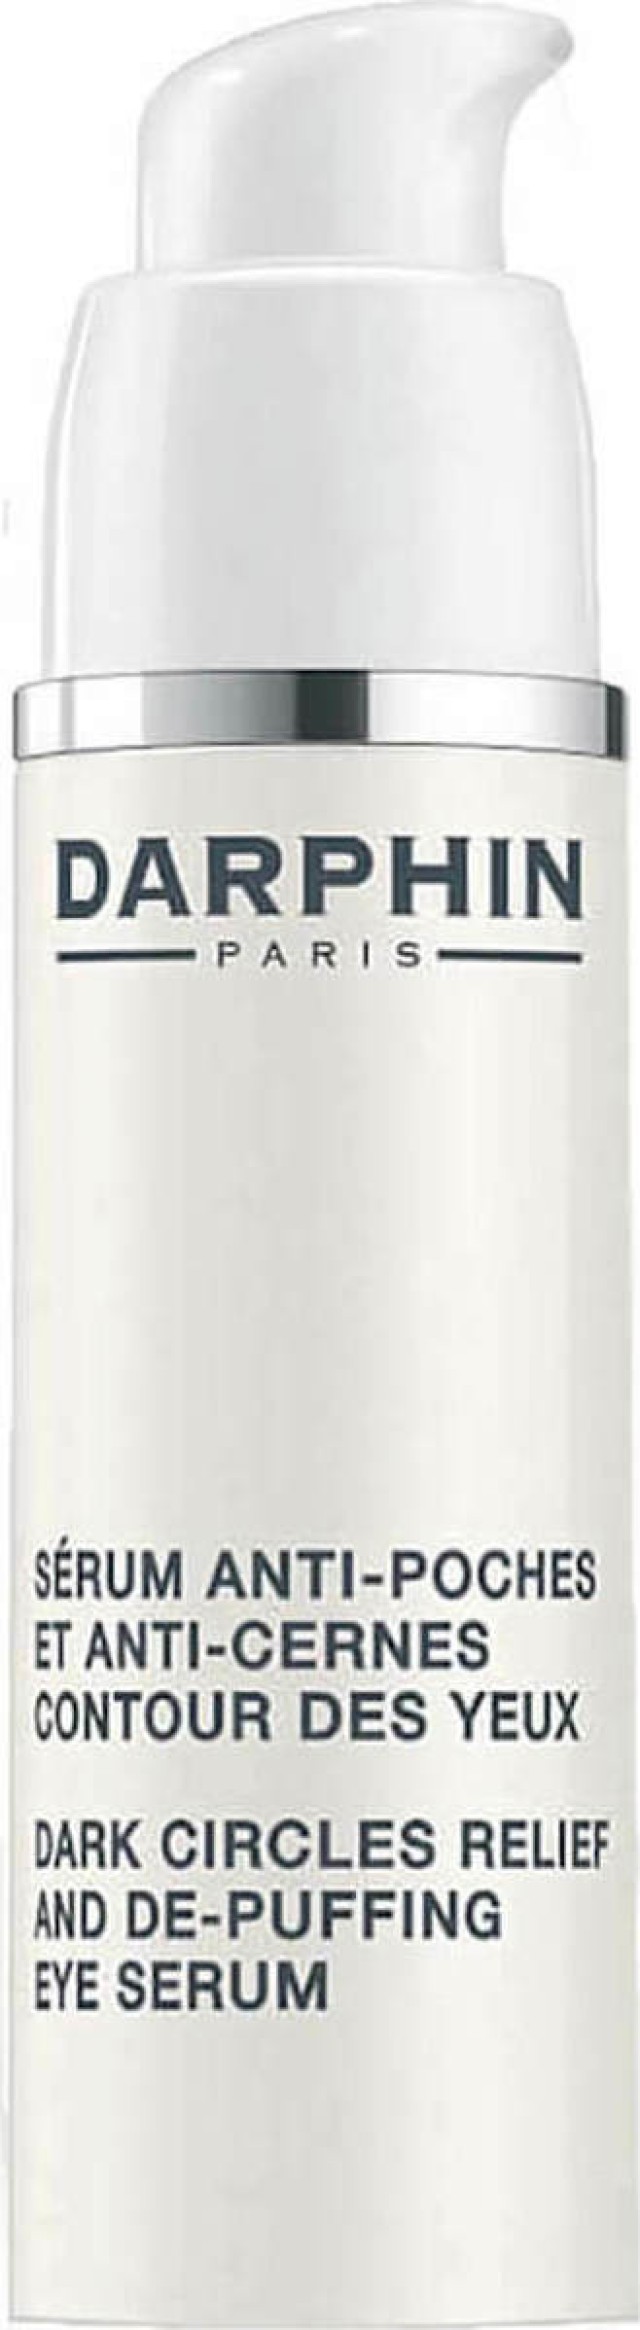 Darphin Dark Circles Relief And De-Puffing Serum Ορός Ενυδάτωσης Ματιών για Μαύρους Κύκλους και Σακούλες, 15ml